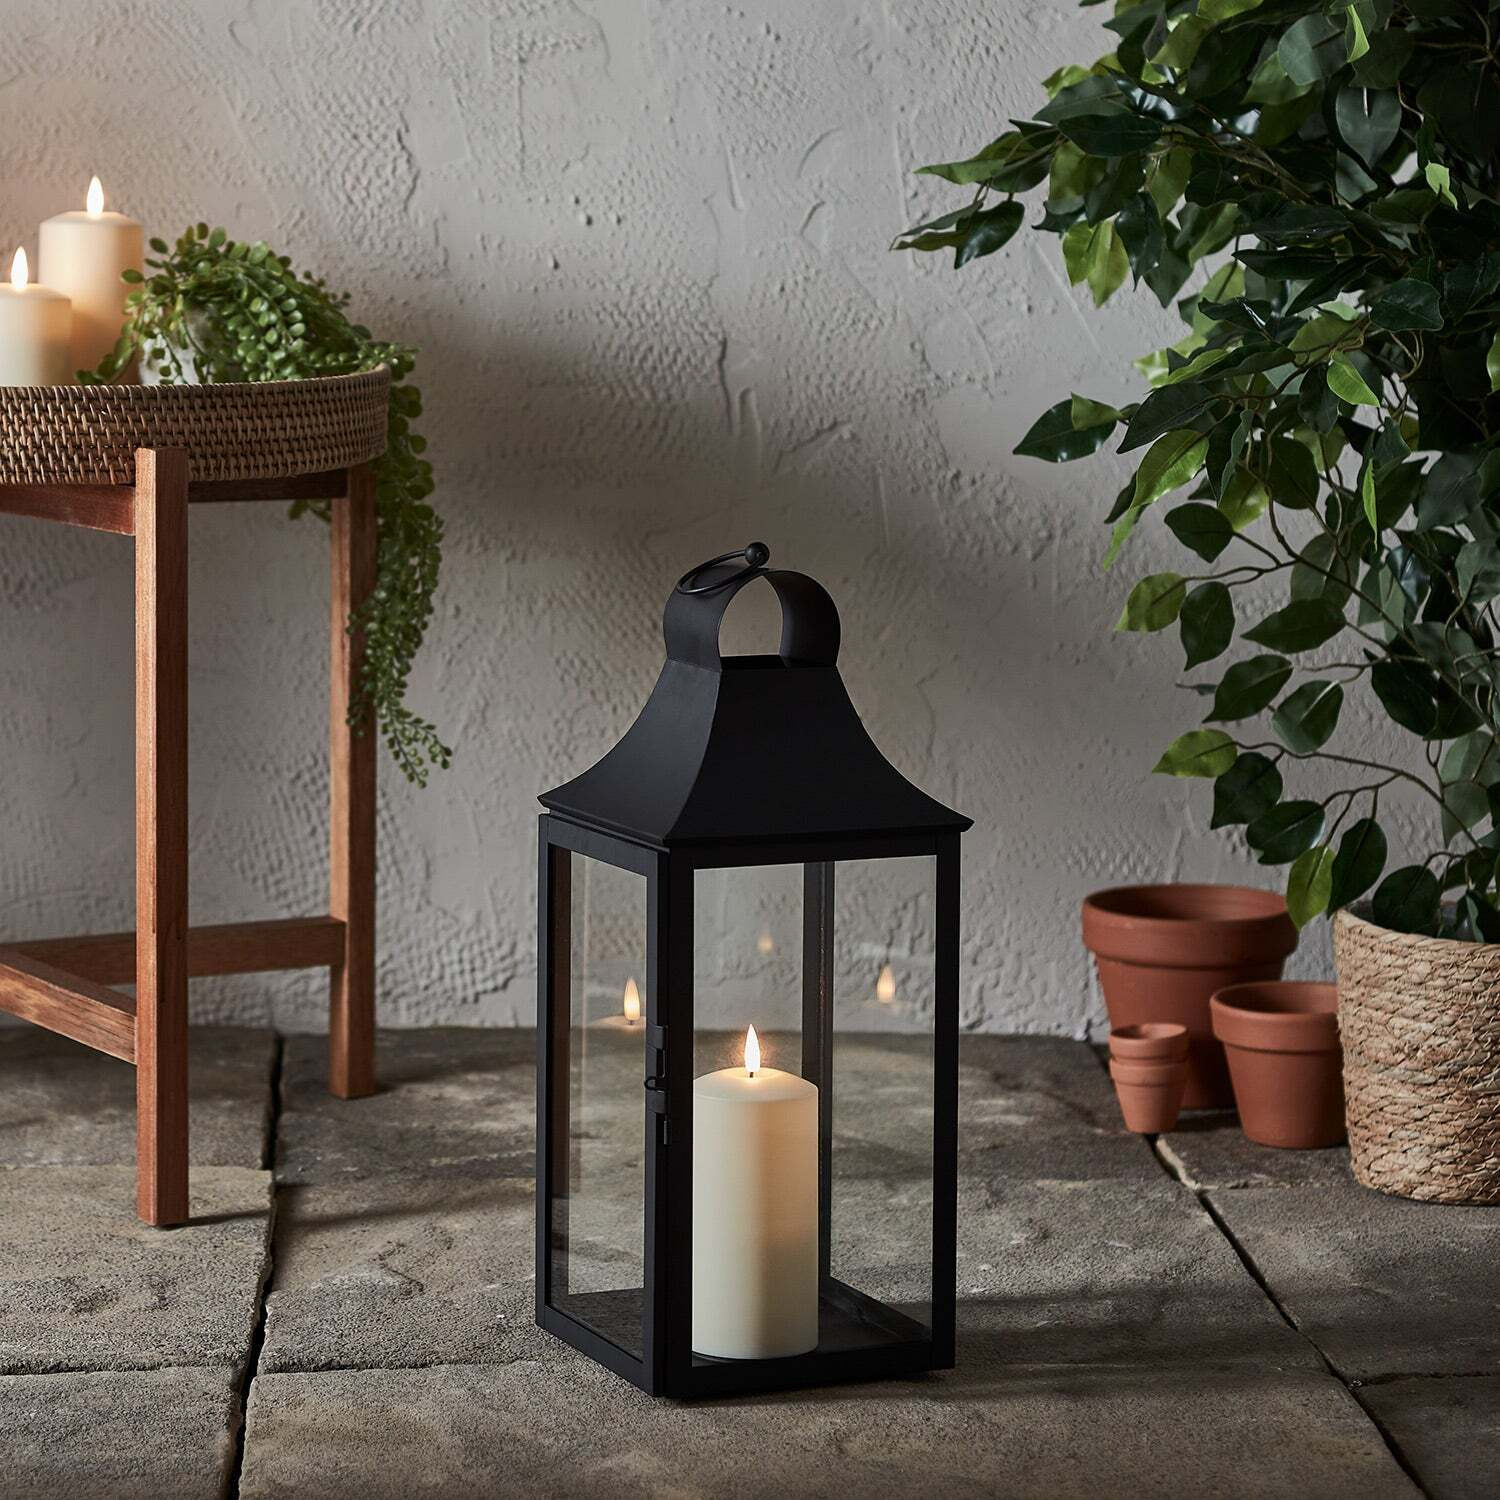 45cm Albury Black Garden Lantern with TruGlow® Candle - image 1